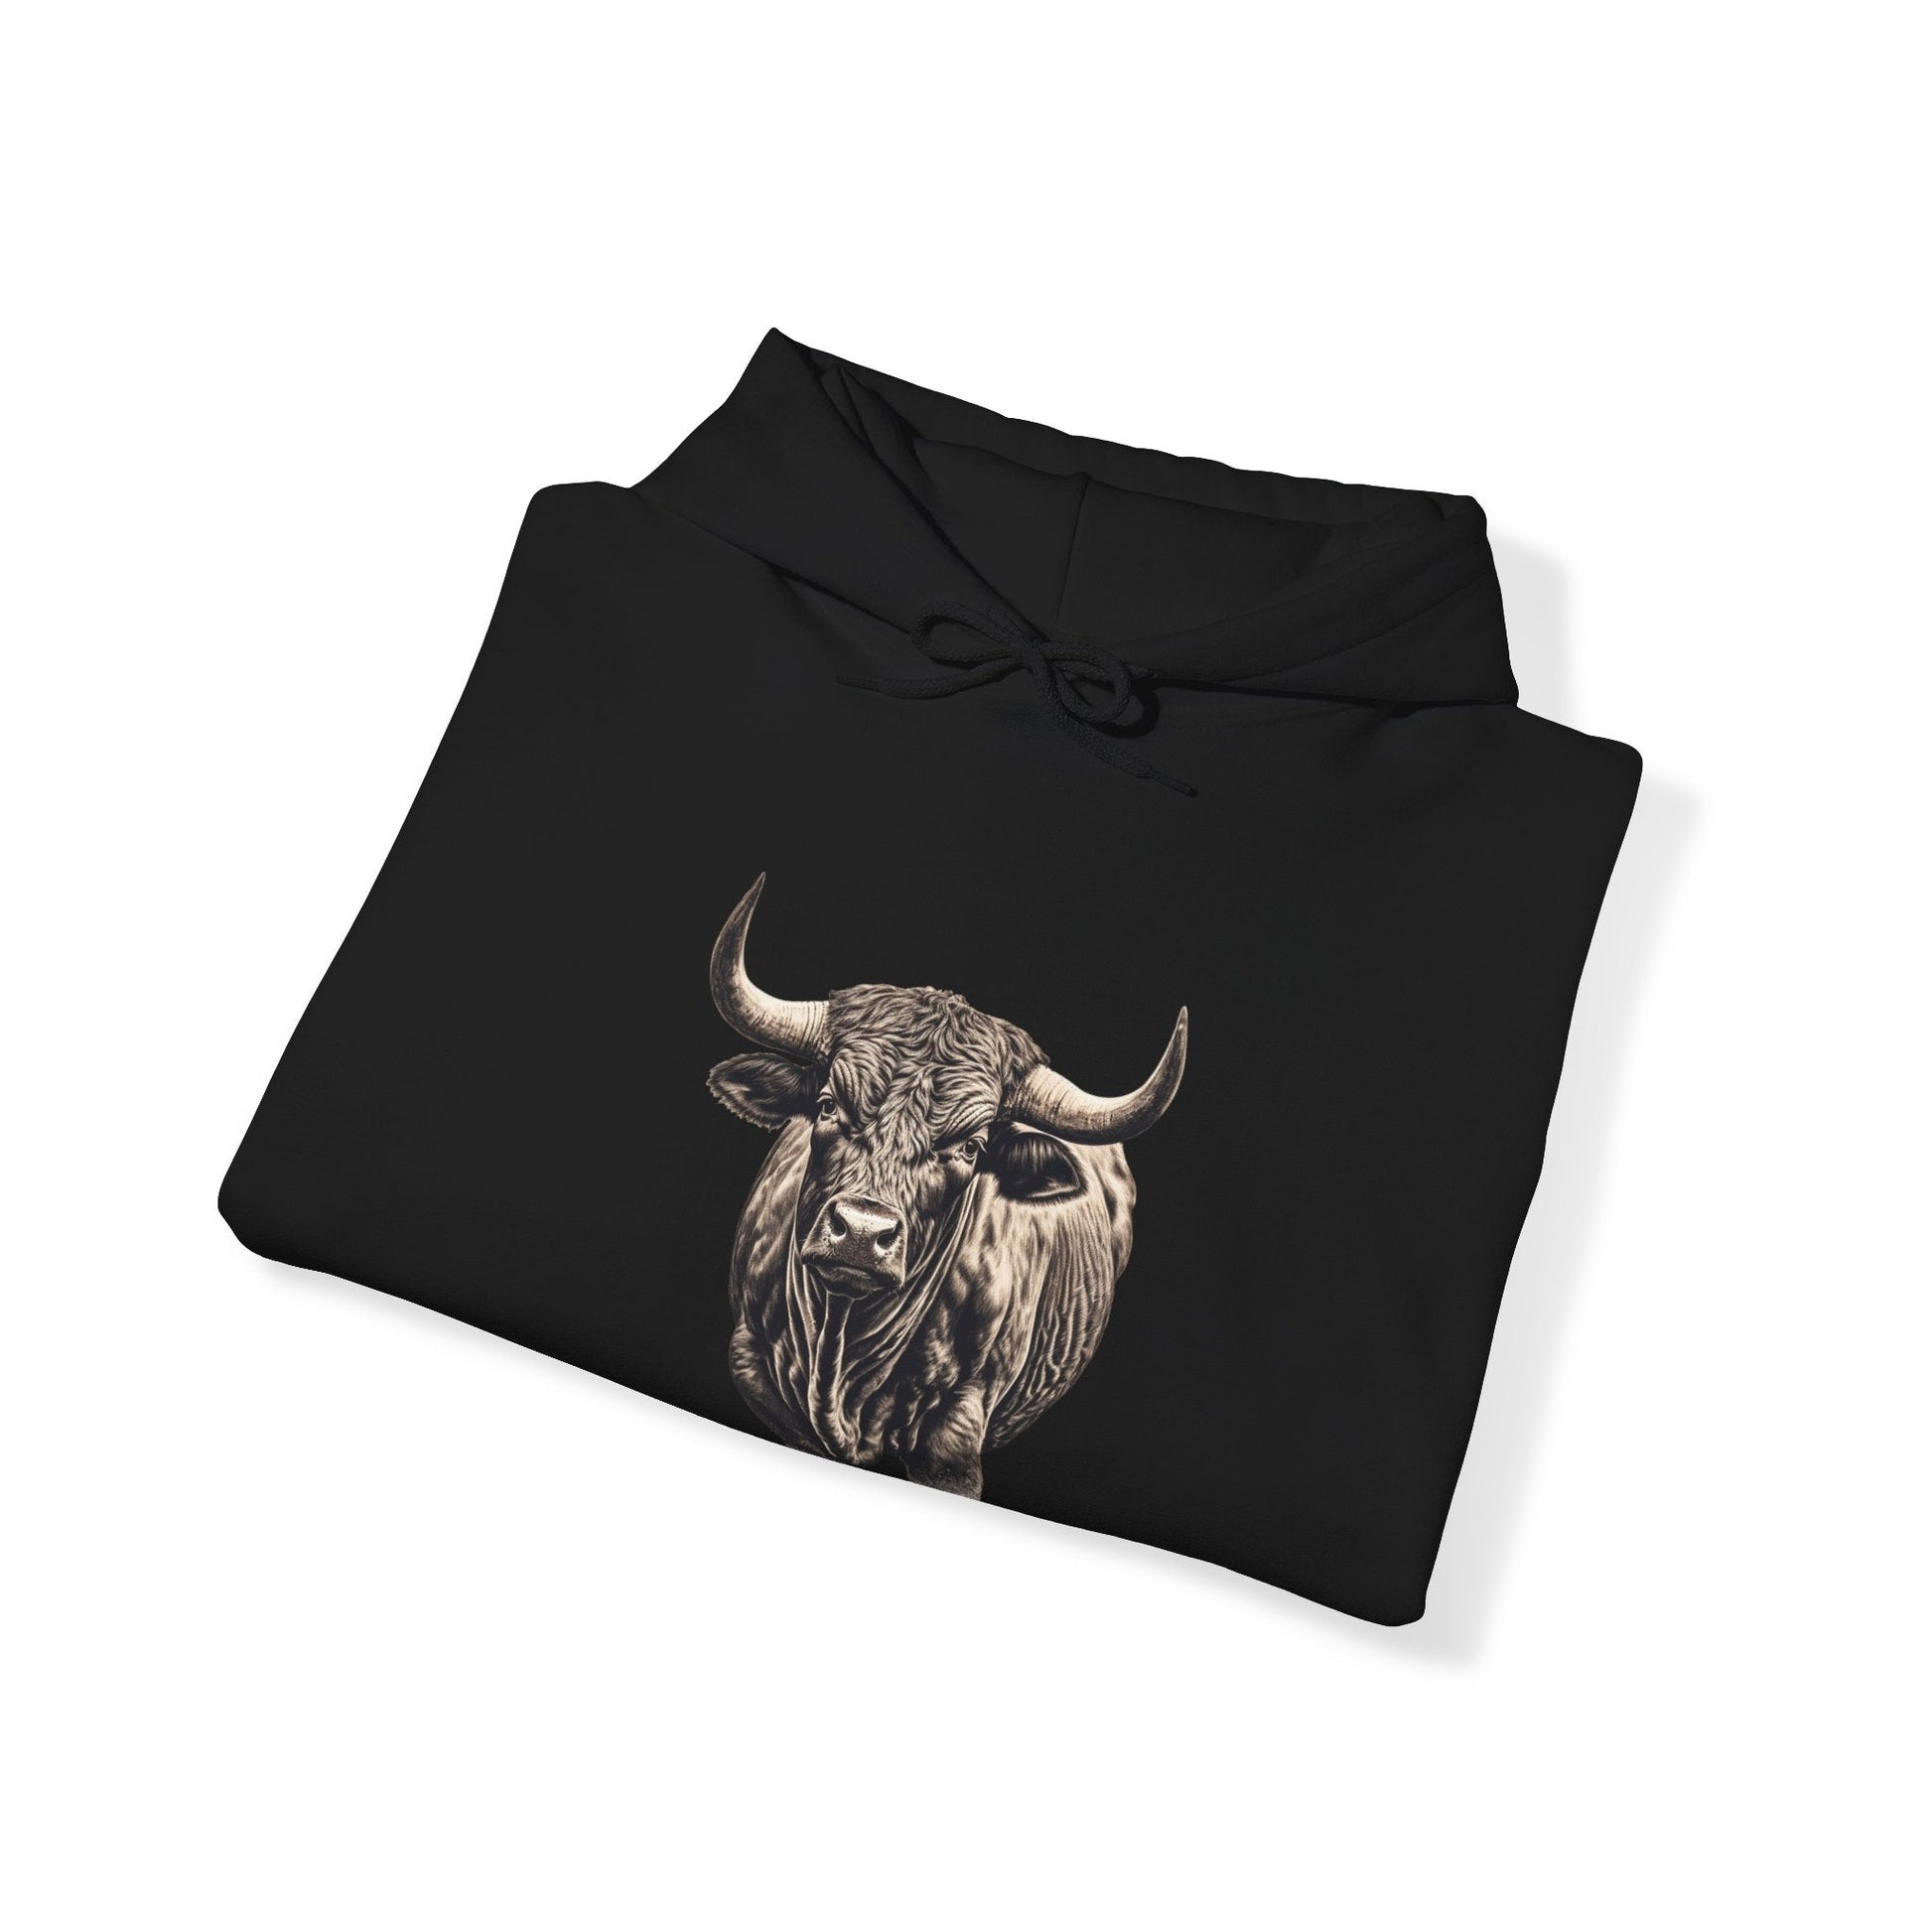 Bull Cow Shirt Hoodie, Vintage Western Wear, Farm Animal Shirt, Bull Cowboy Rodeo Shirt - FlooredByArt